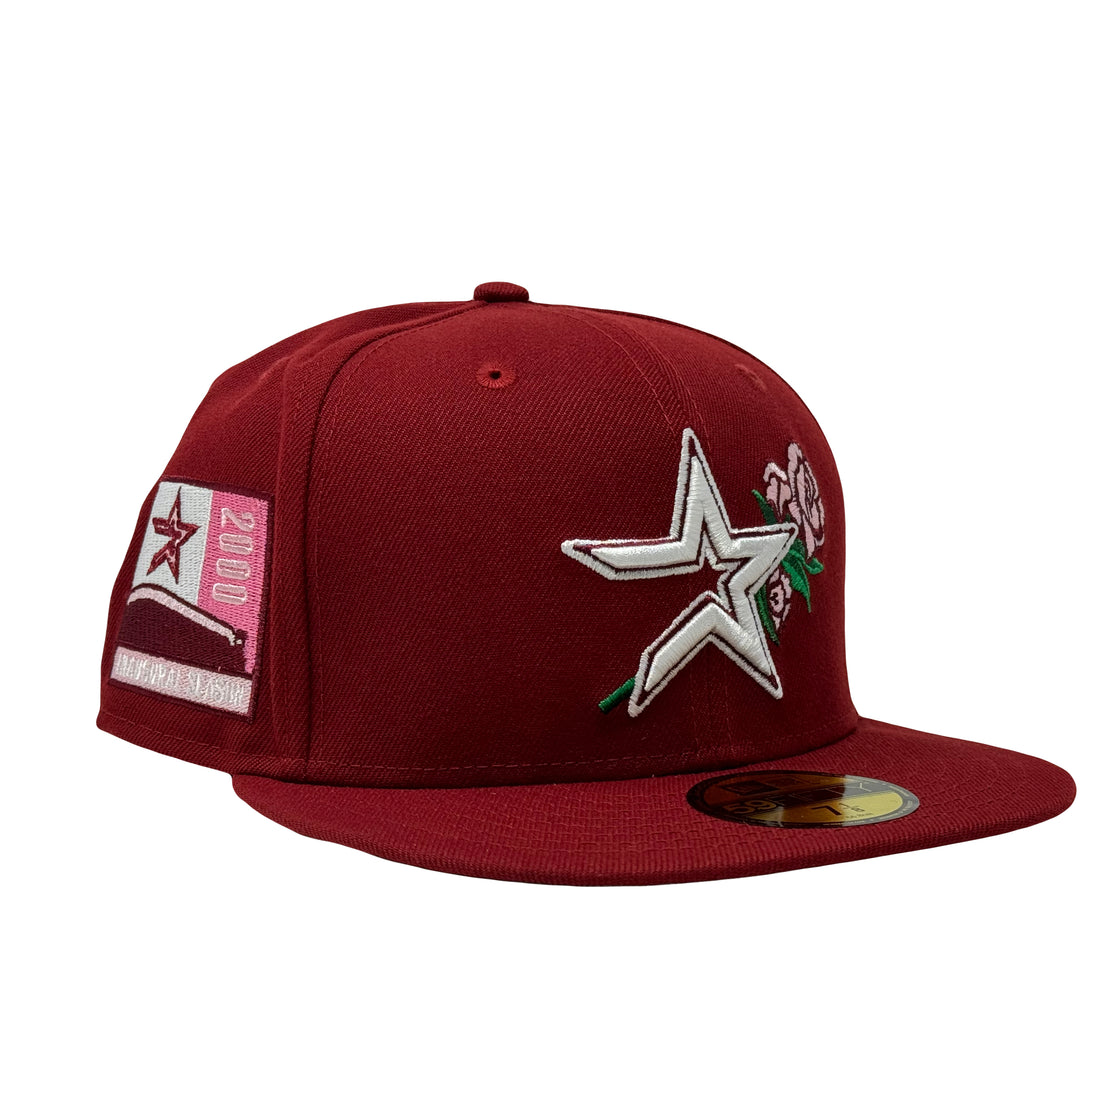 Houston Astros 2000 Inaugural Season Valentine's Day Pack Burgundy New Era Fitted Hat